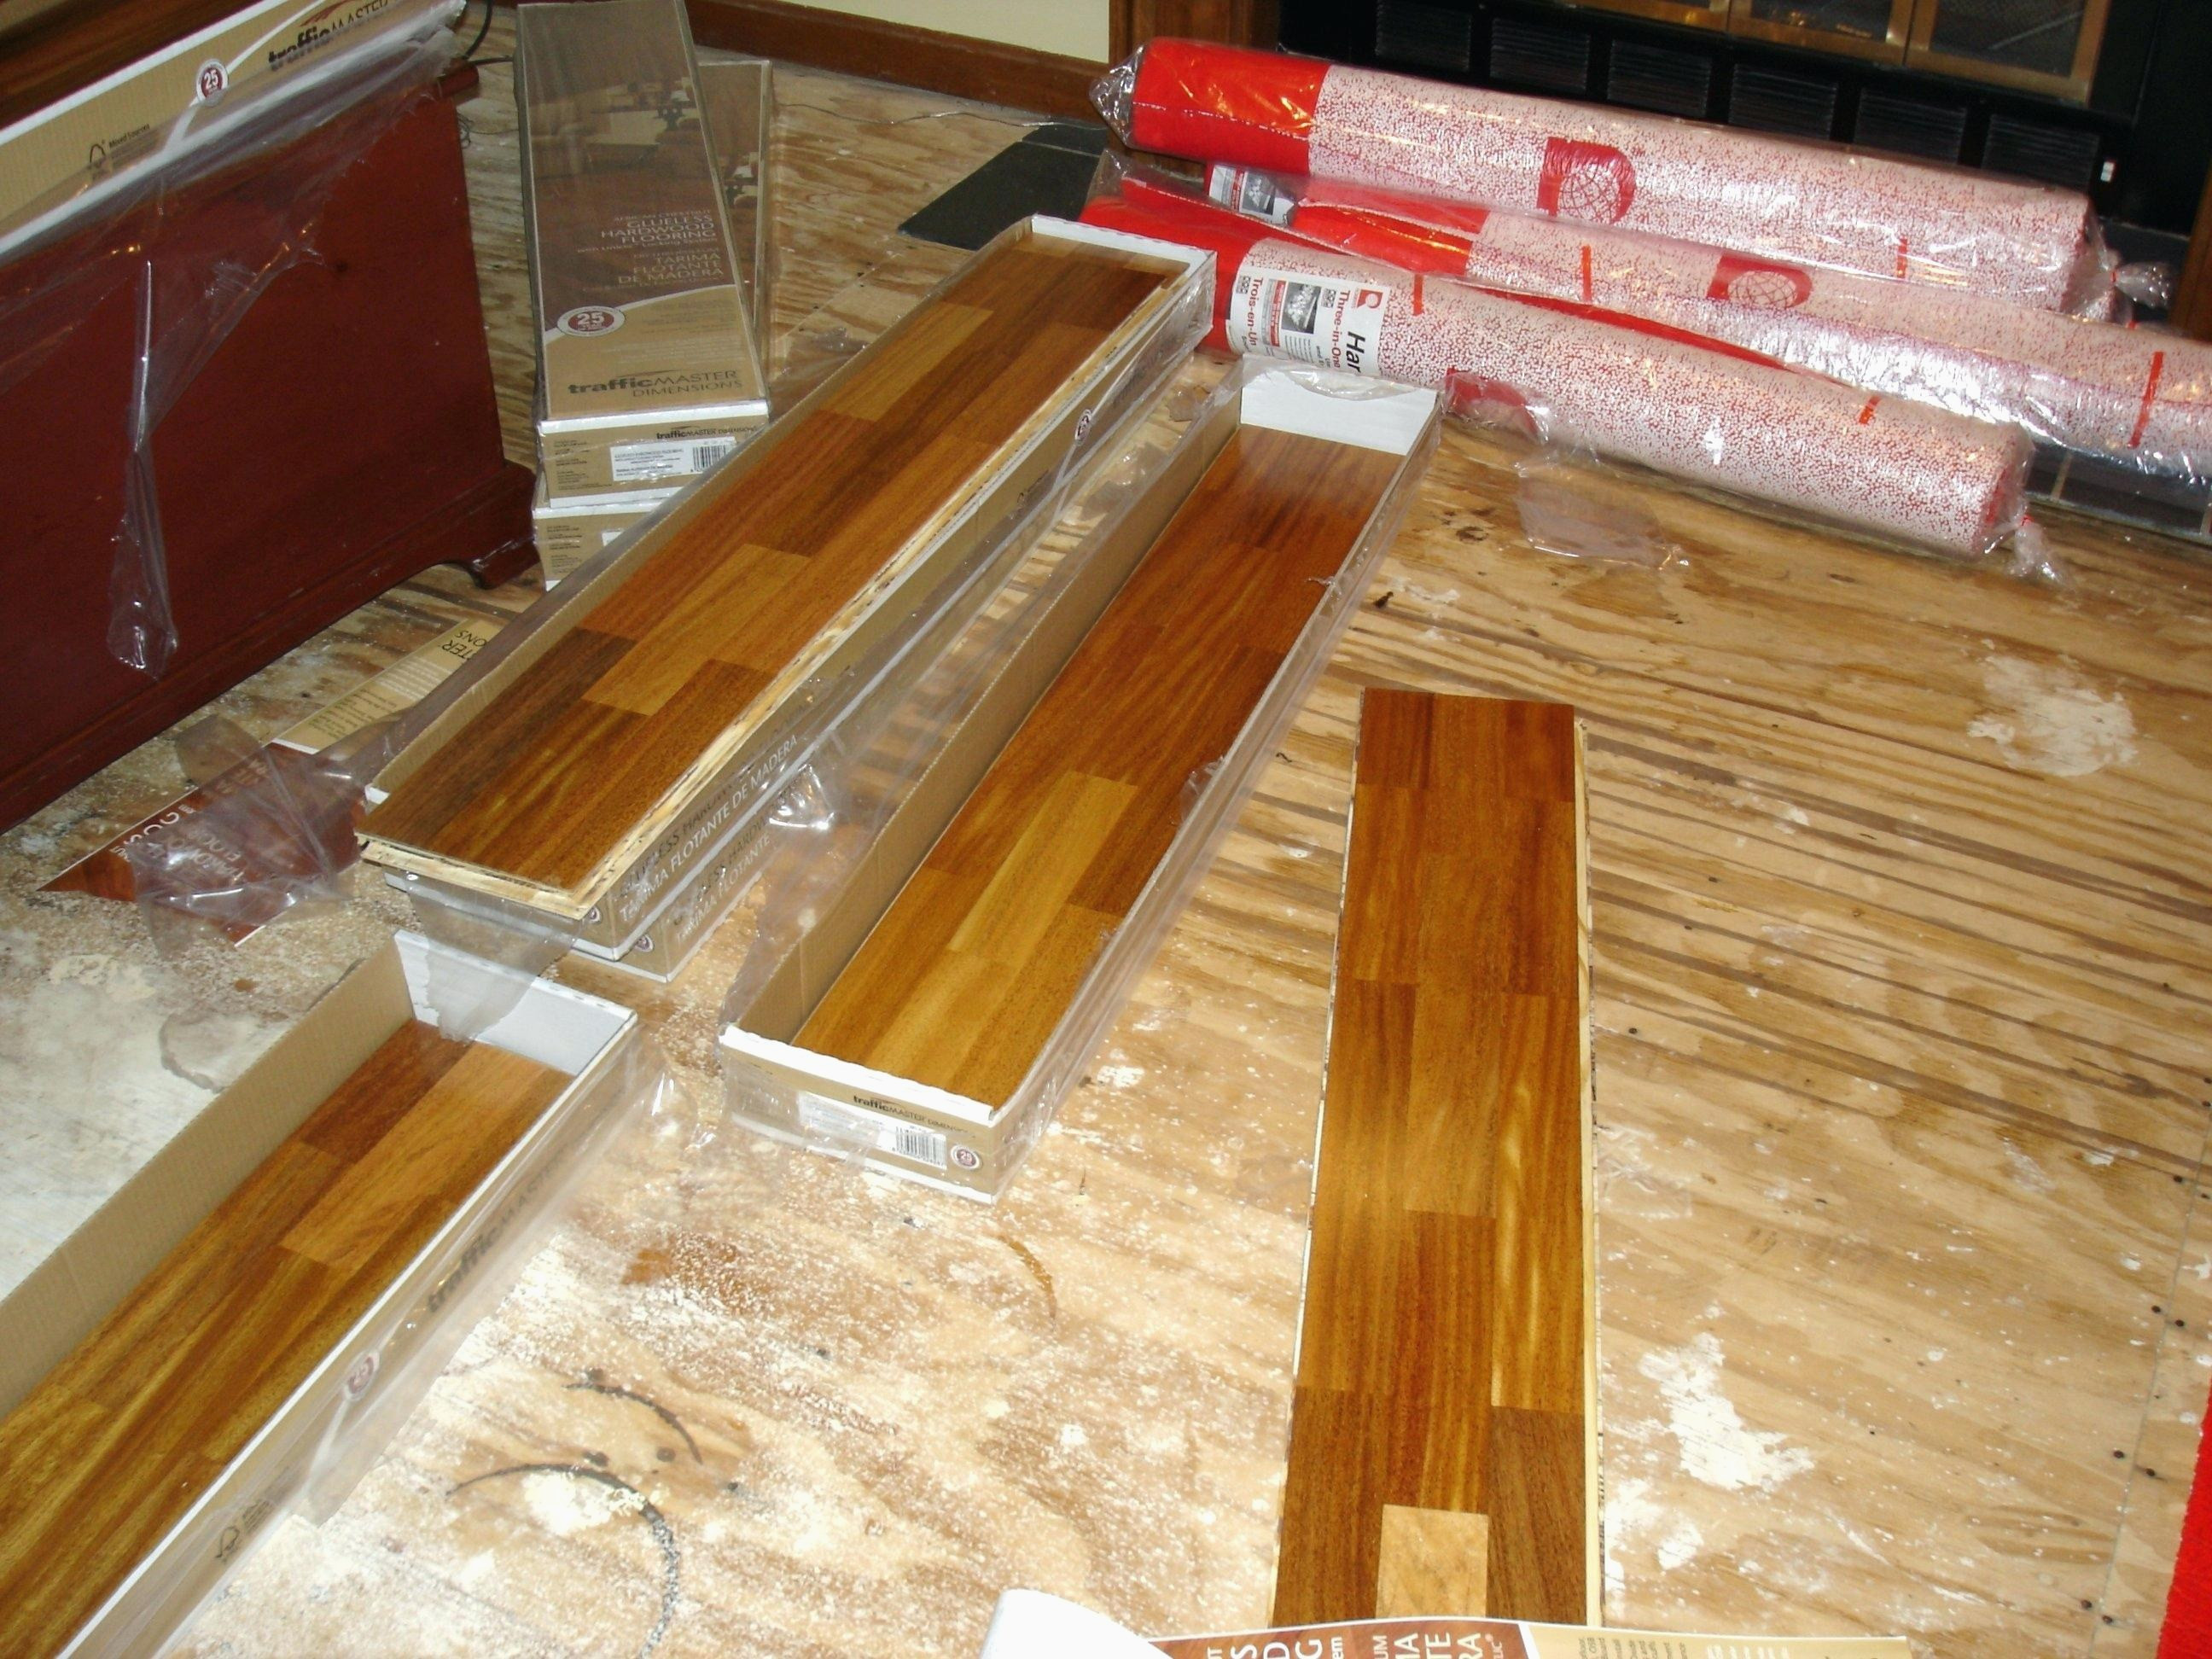 Lowes 3 4 Hardwood Flooring Of Lowes Wood Tile Flooring Complete Floor Glue Lowes Tile solvent Wood Pertaining to Lowes Wood Tile Flooring Complete Floor Glue Lowes Tile solvent Wood Bayscan